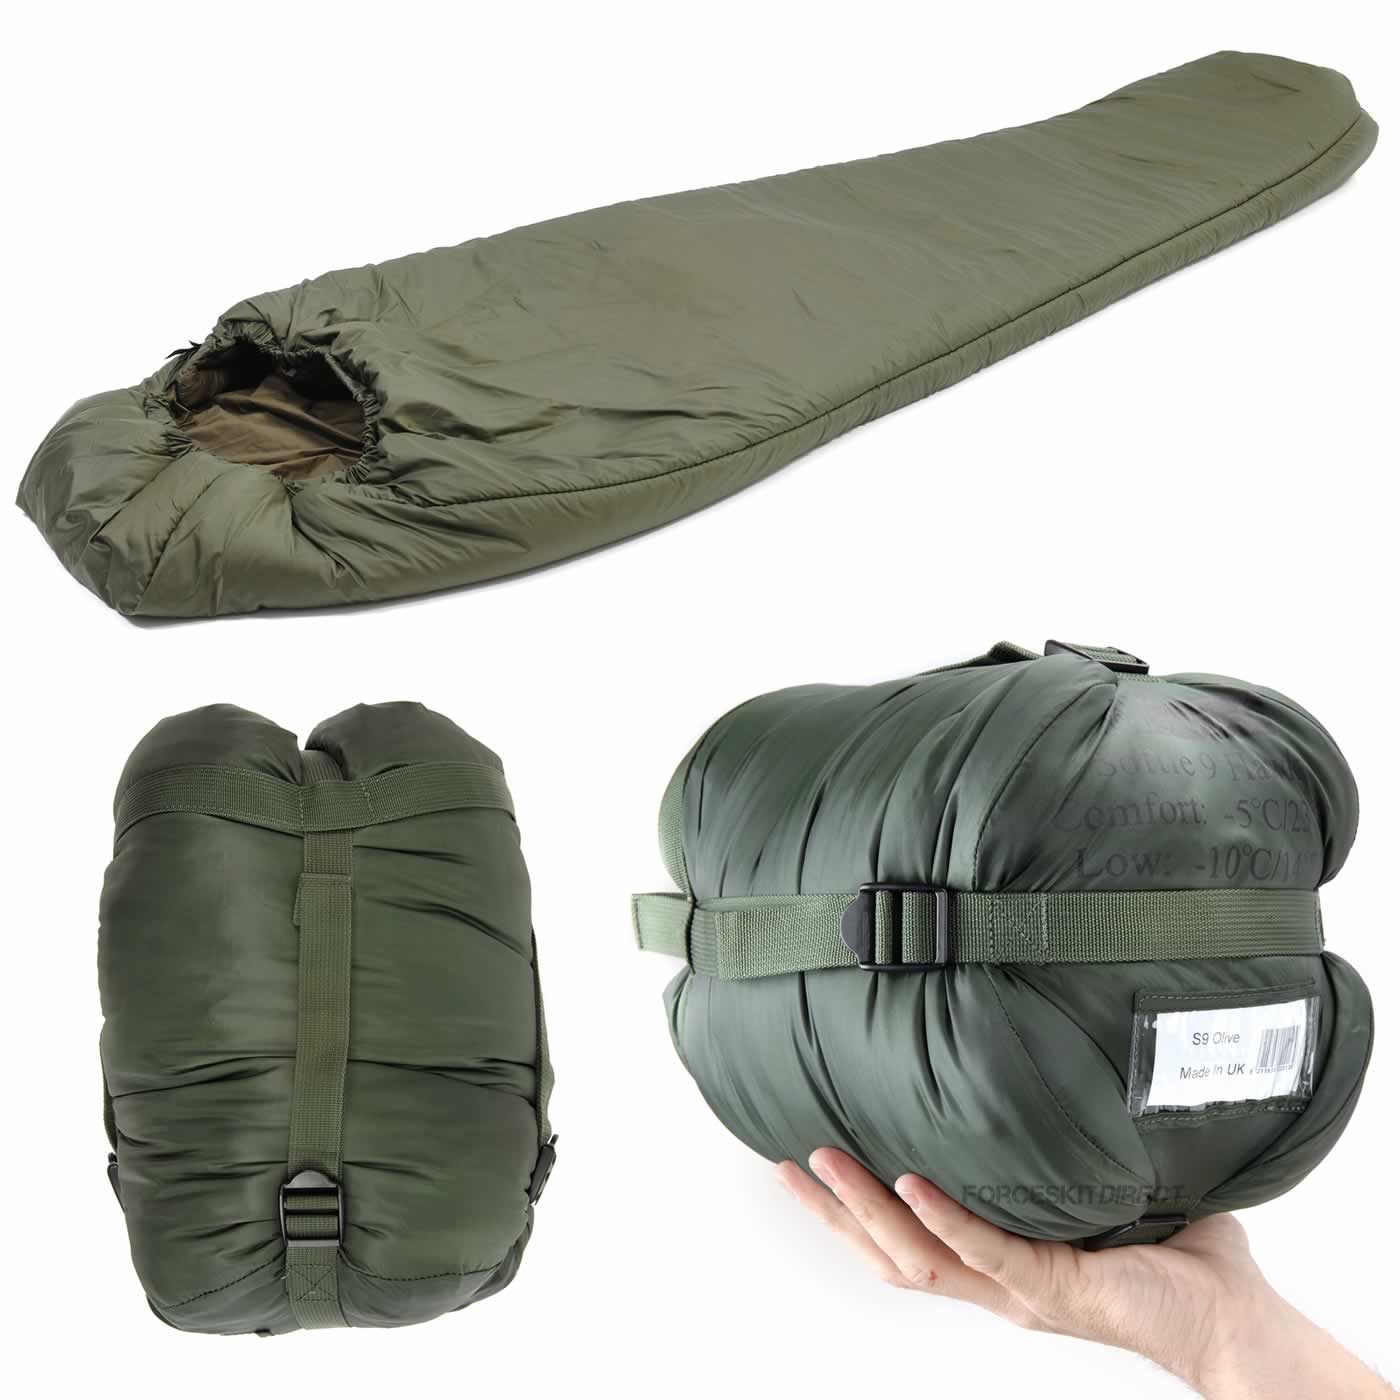 Snugpak Softie 9 Hawk Military Army Sleeping Bag Compact Adult Travel ...